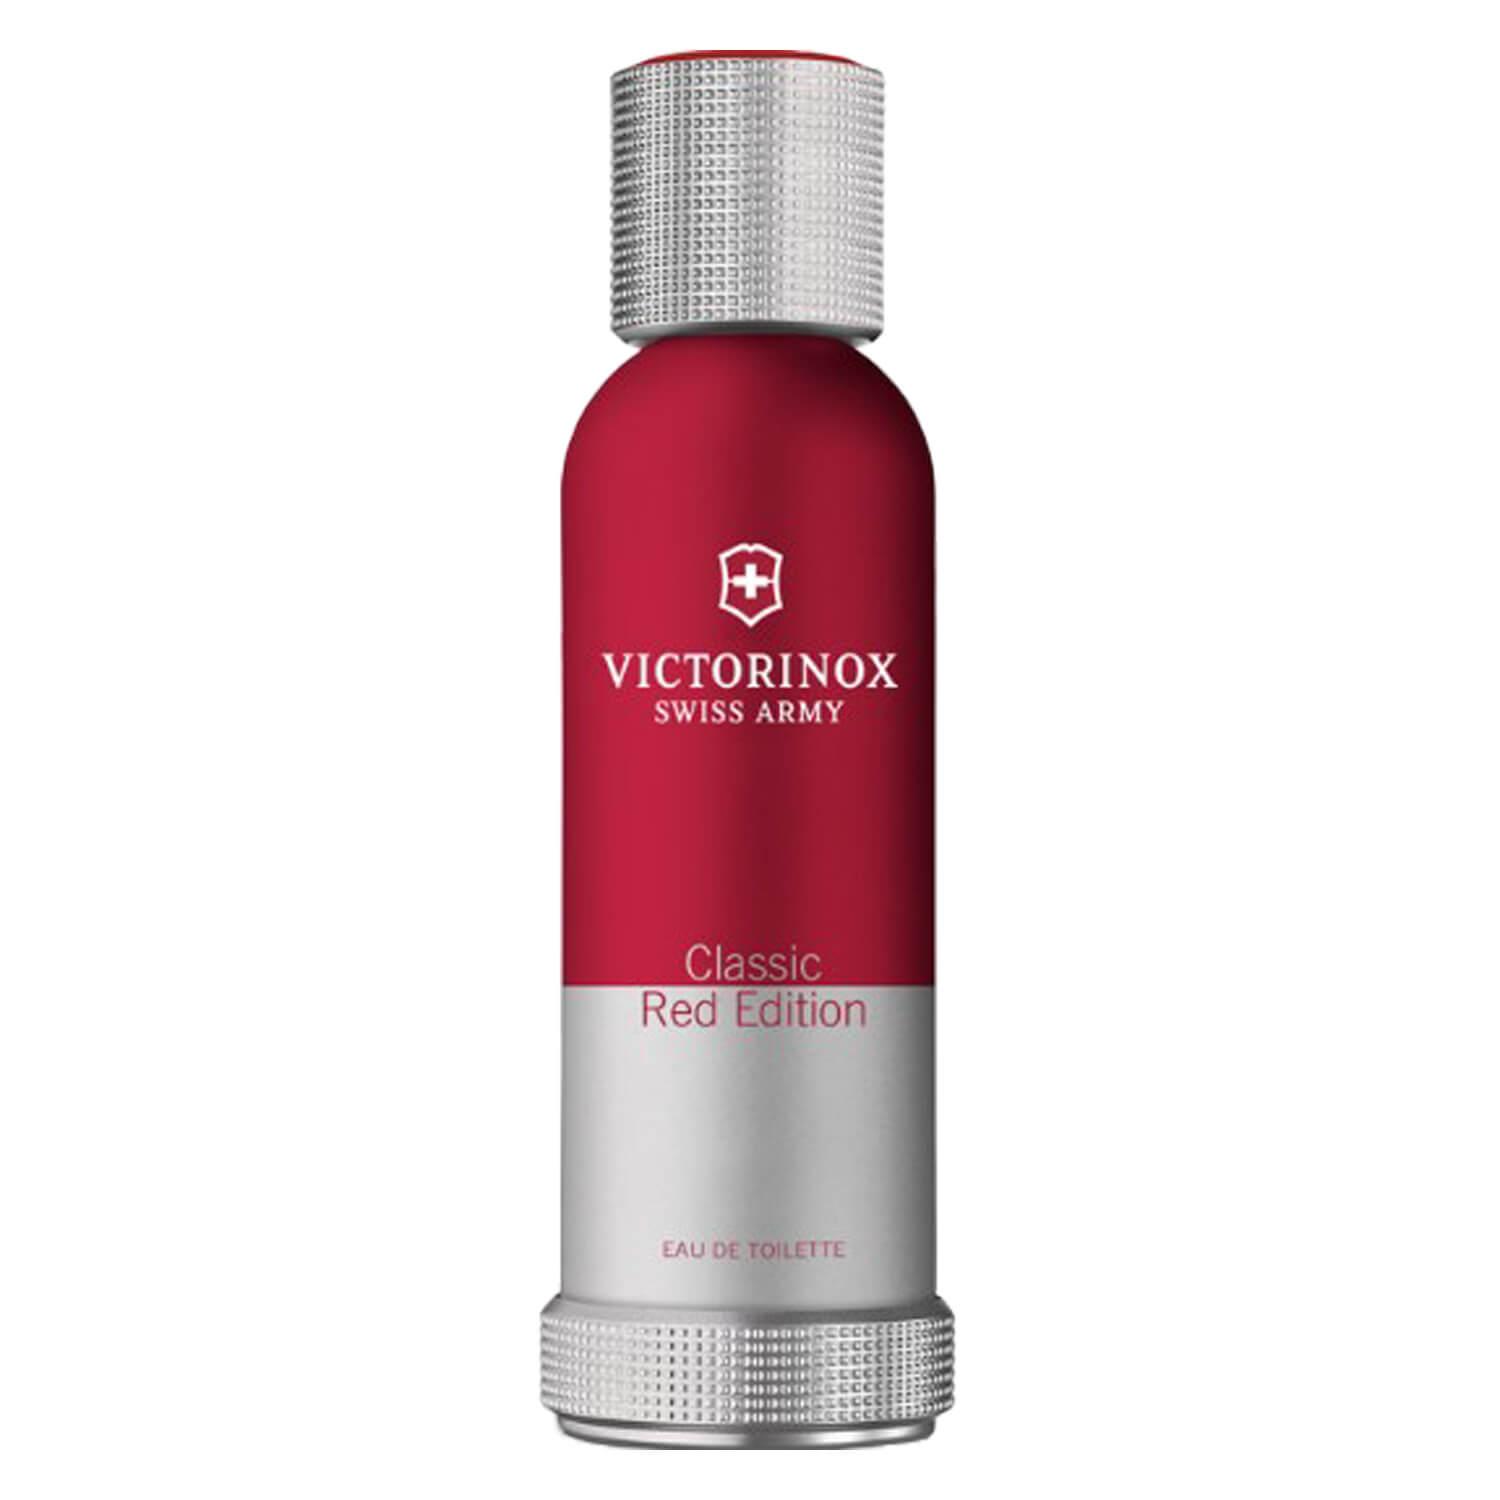 Victorinox Swiss Army - Classic Red Edition Eau de Toilette